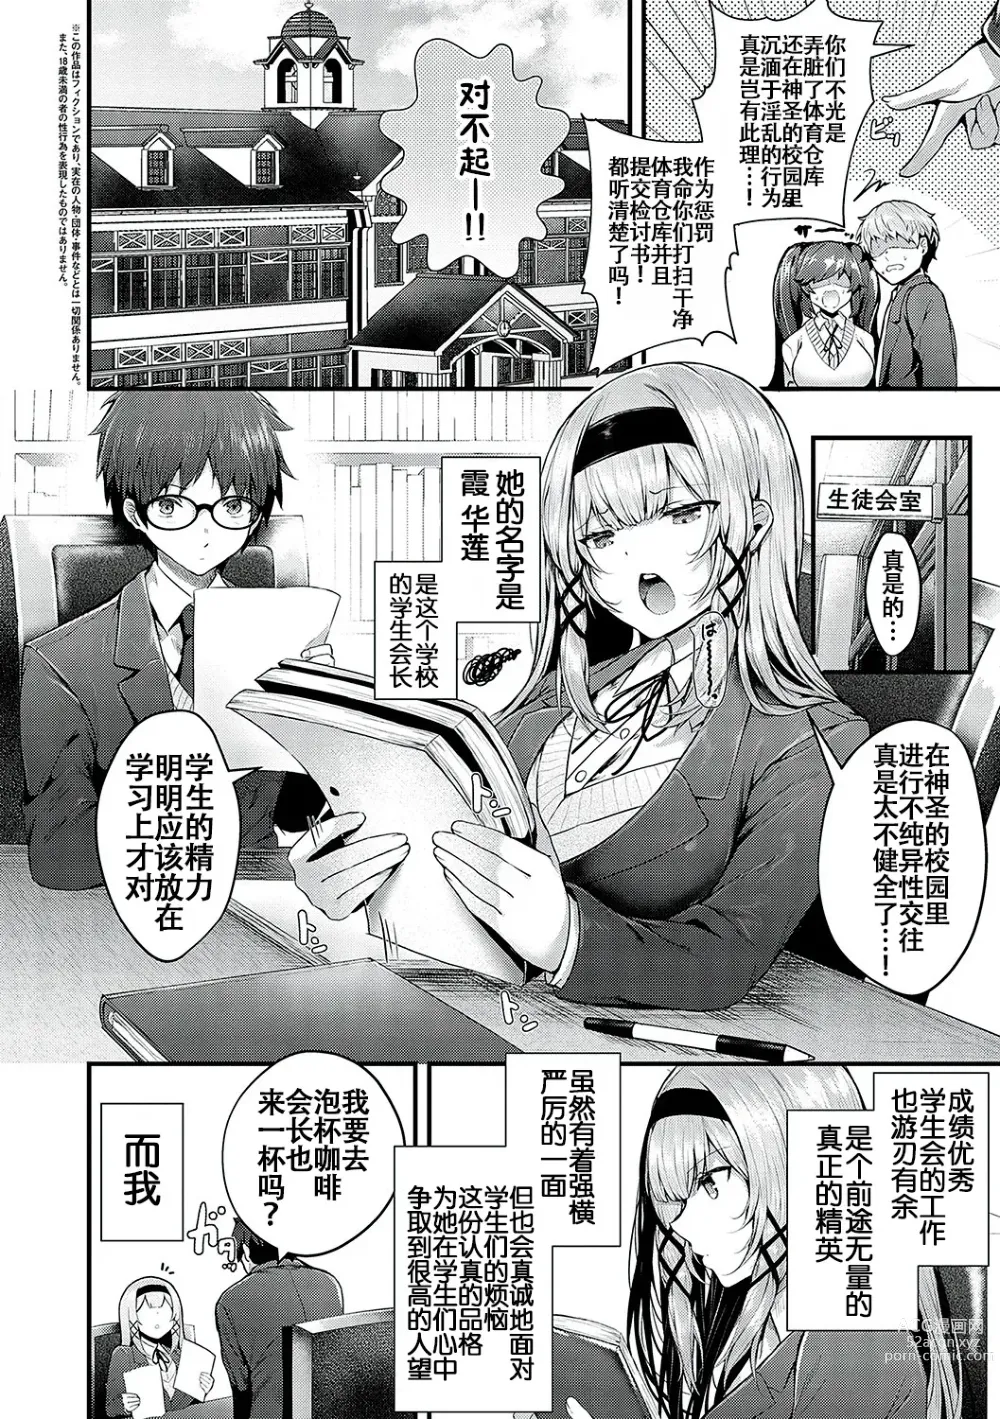 Page 5 of manga Namaiki Love Hole